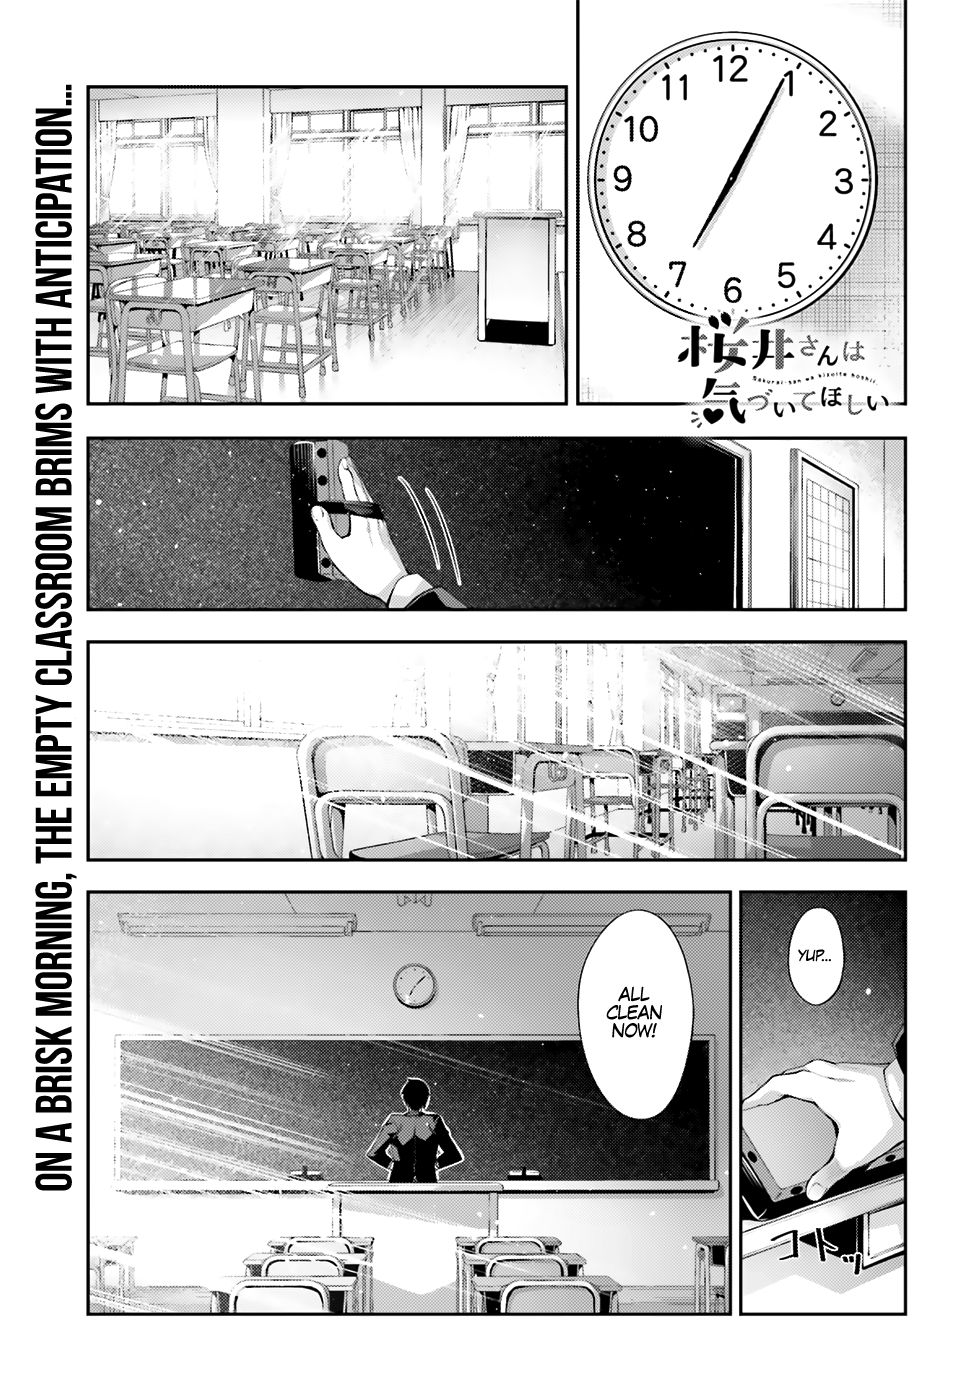 Sakurai-san Wants To Be Noticed - chapter 10 - #2